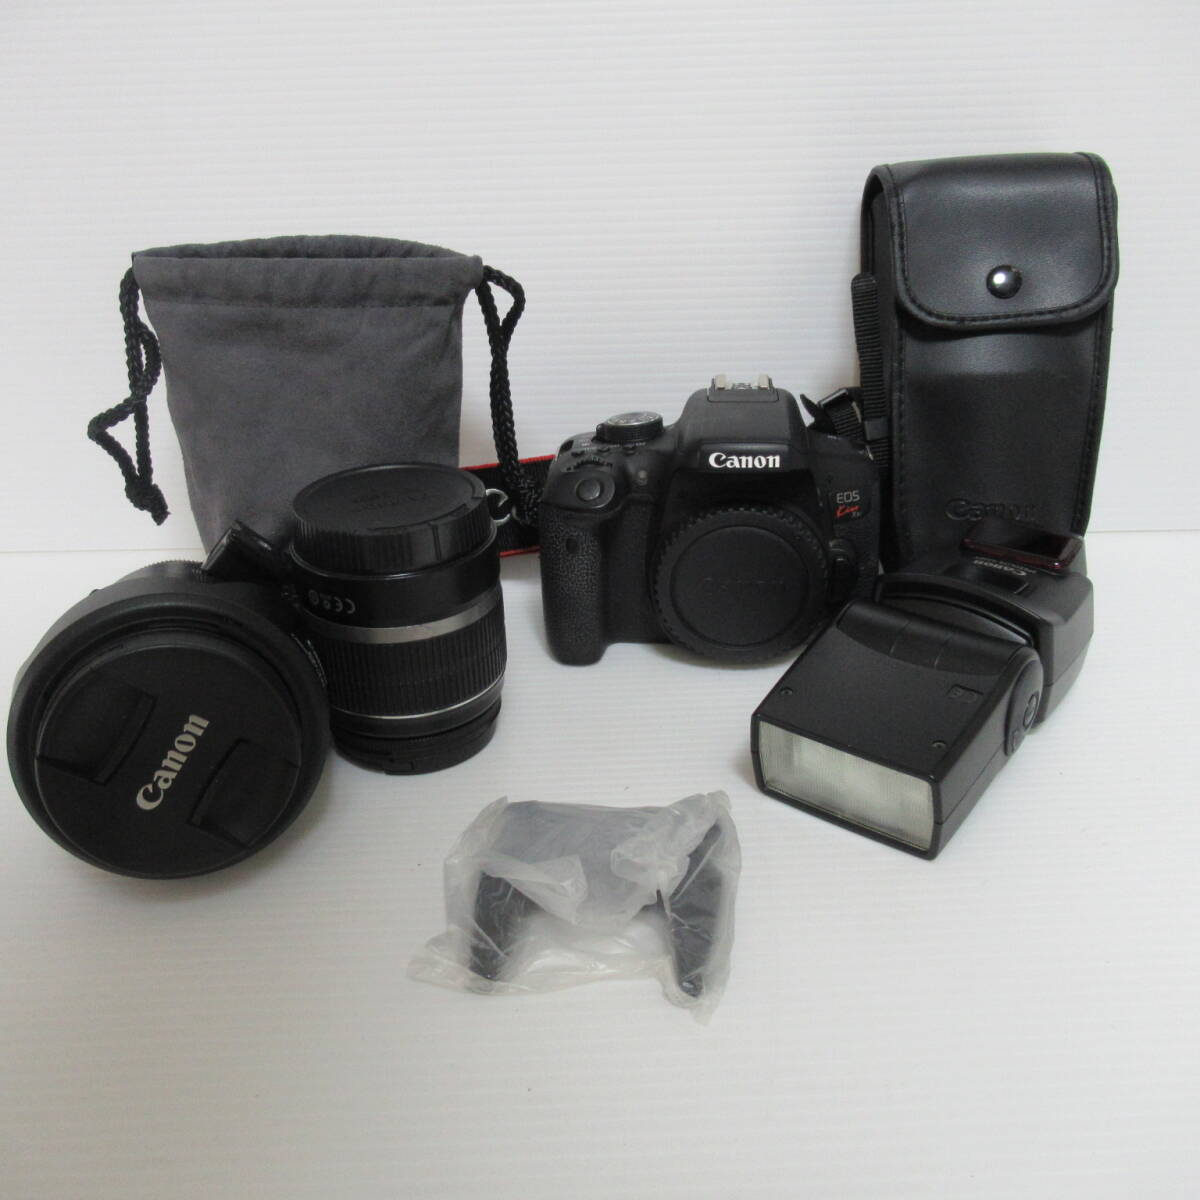  camera Canon EOS KissX8i Speedlight camera lens operation not yet verification case attaching 80 size shipping p-2634054-276-mrrz